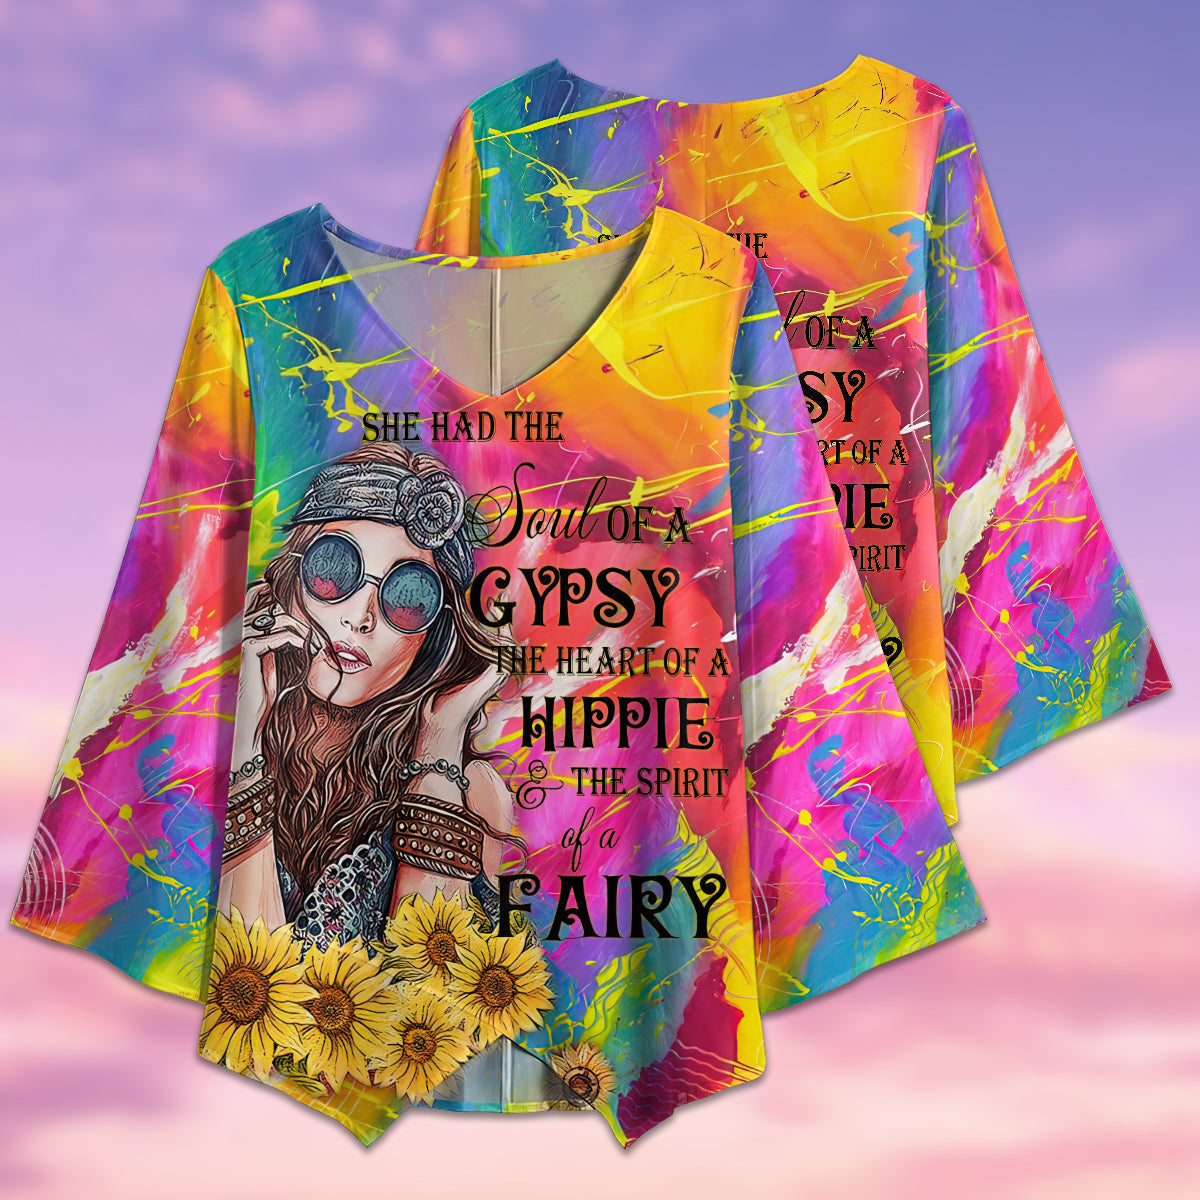 Hippie Heart And Gypsy Soul - V-neck T-shirt - Owls Matrix LTD